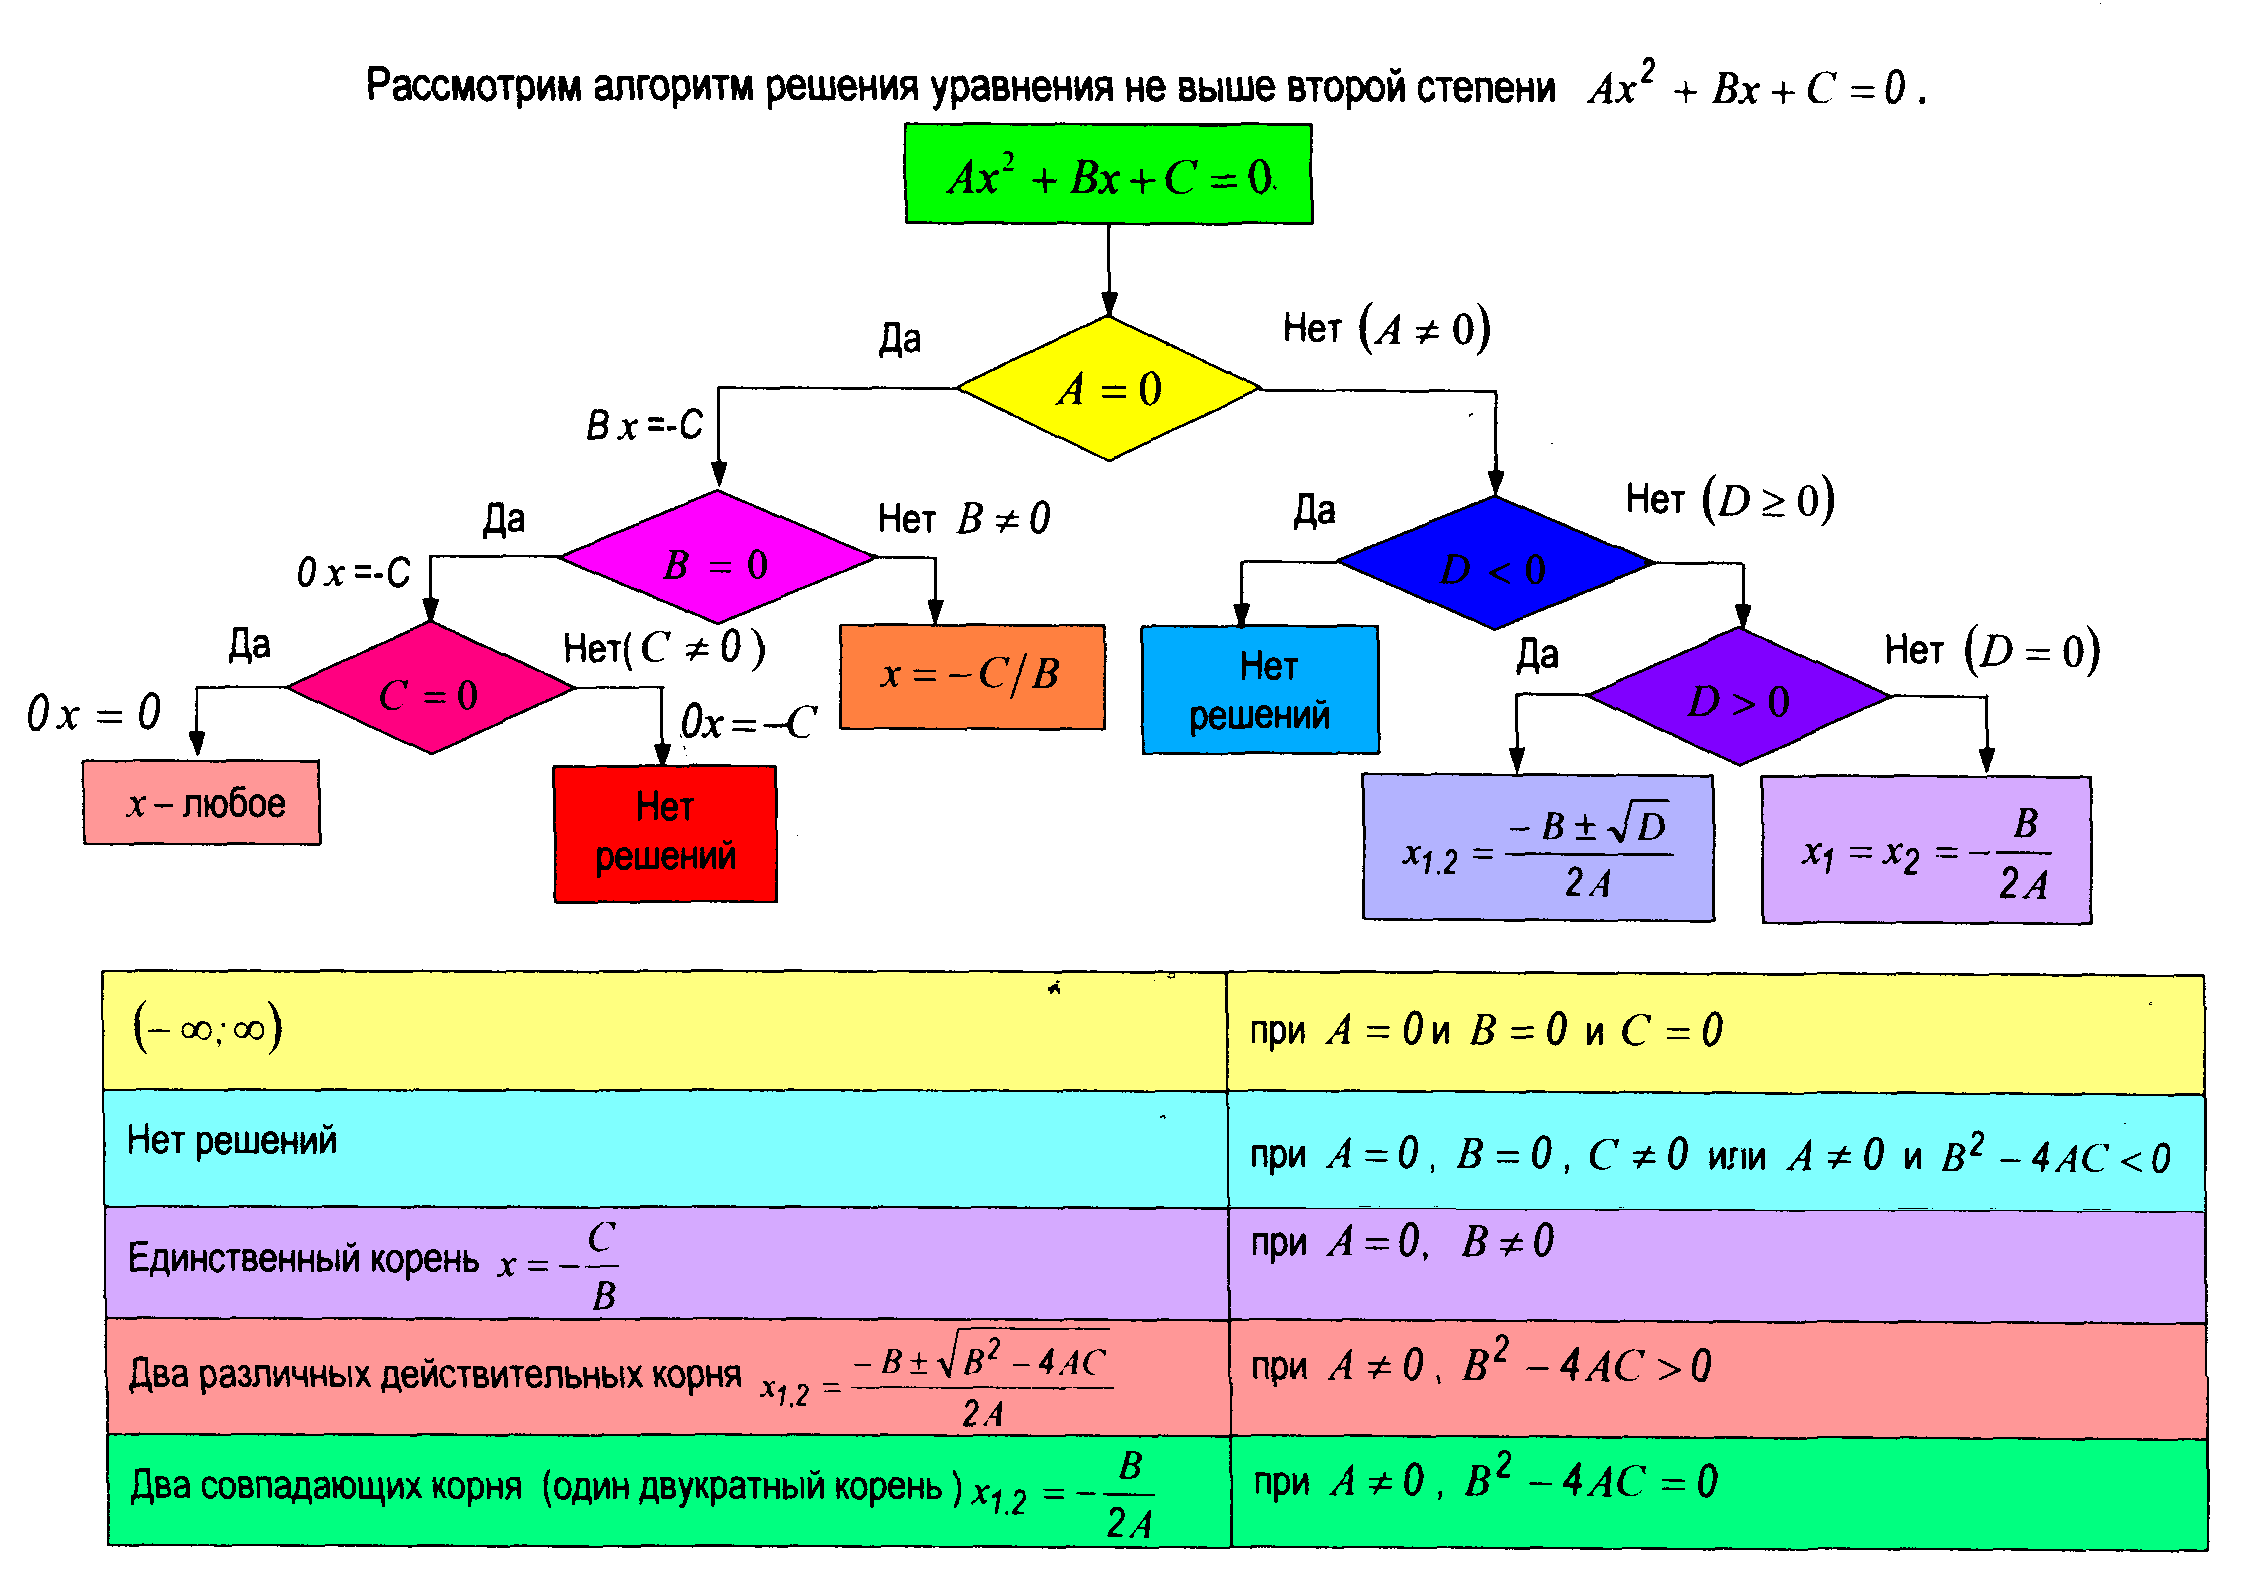 Алгоритм решения параметра